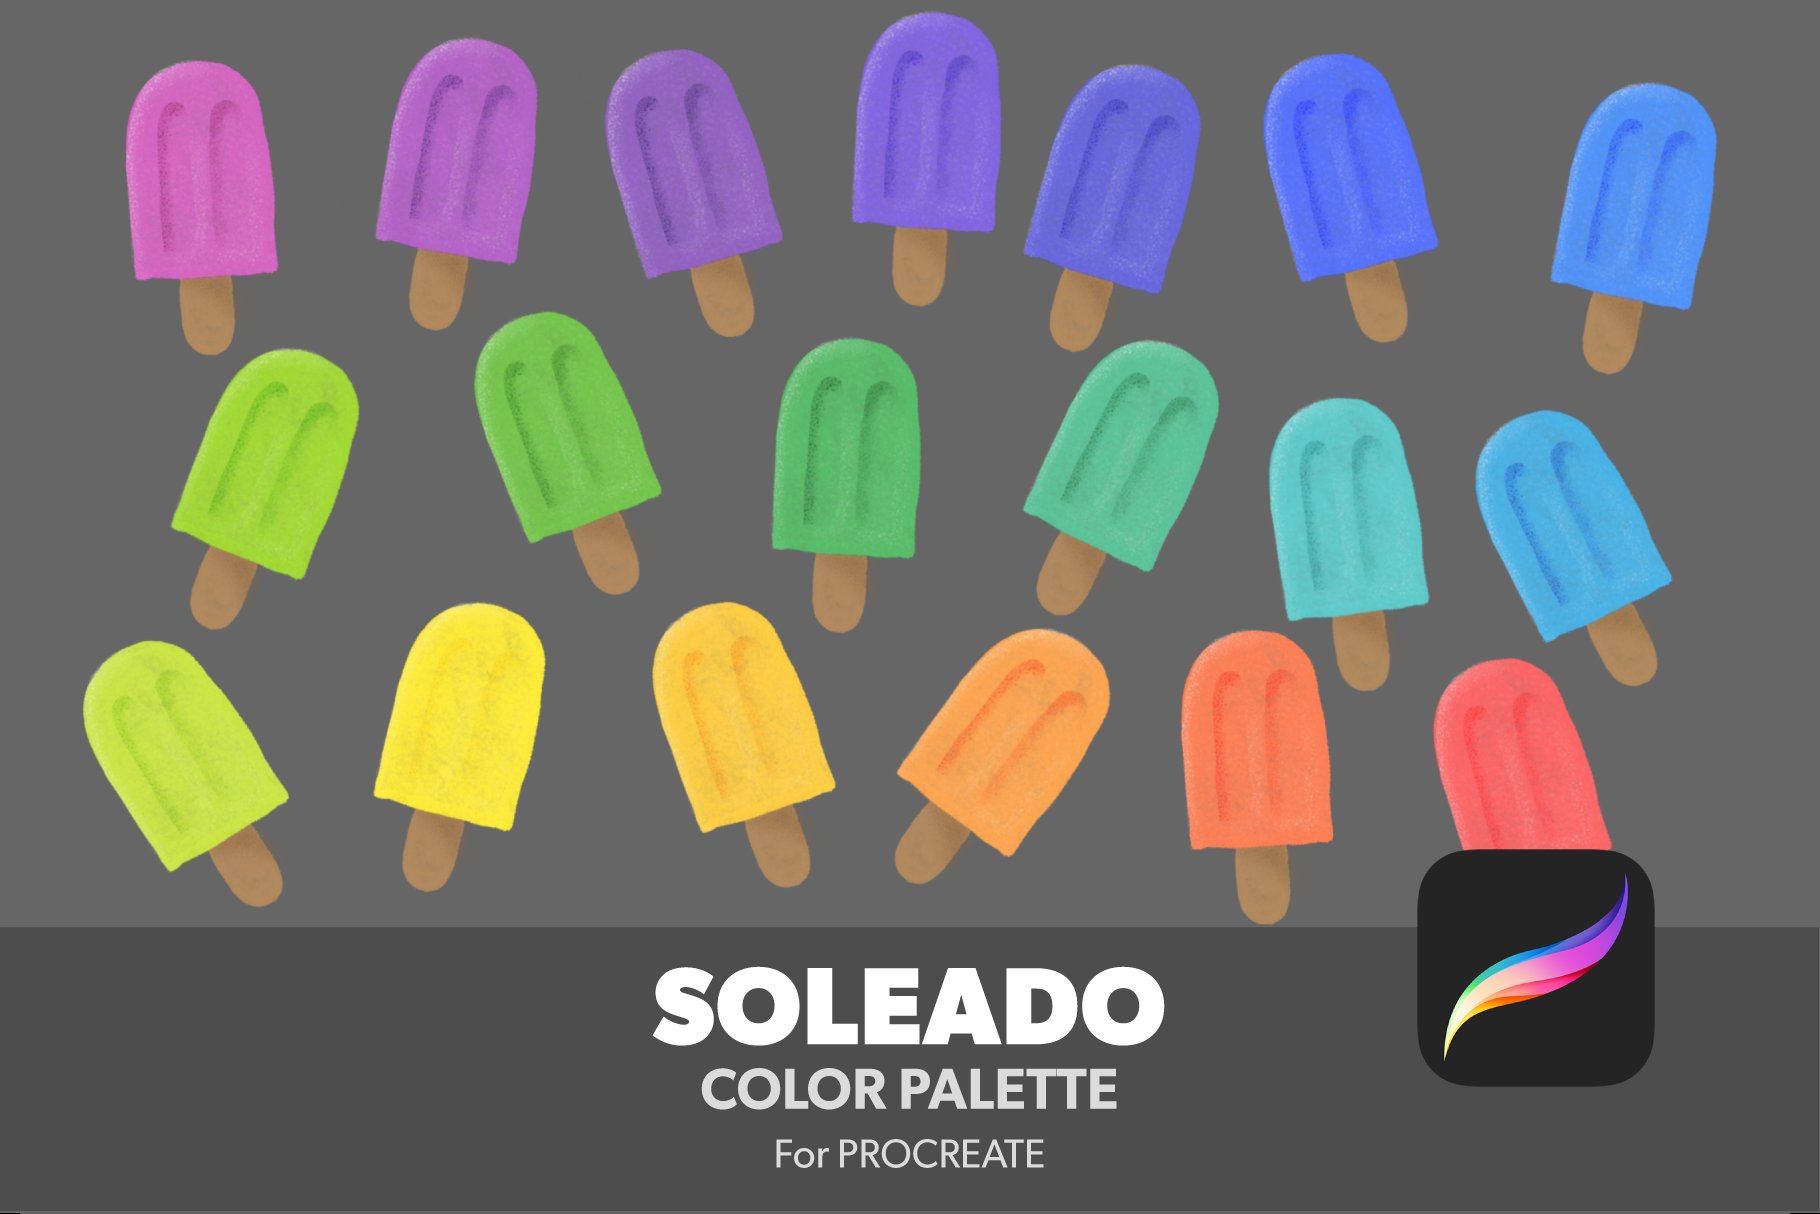 Soleado Color Palette for Procreatecover image.